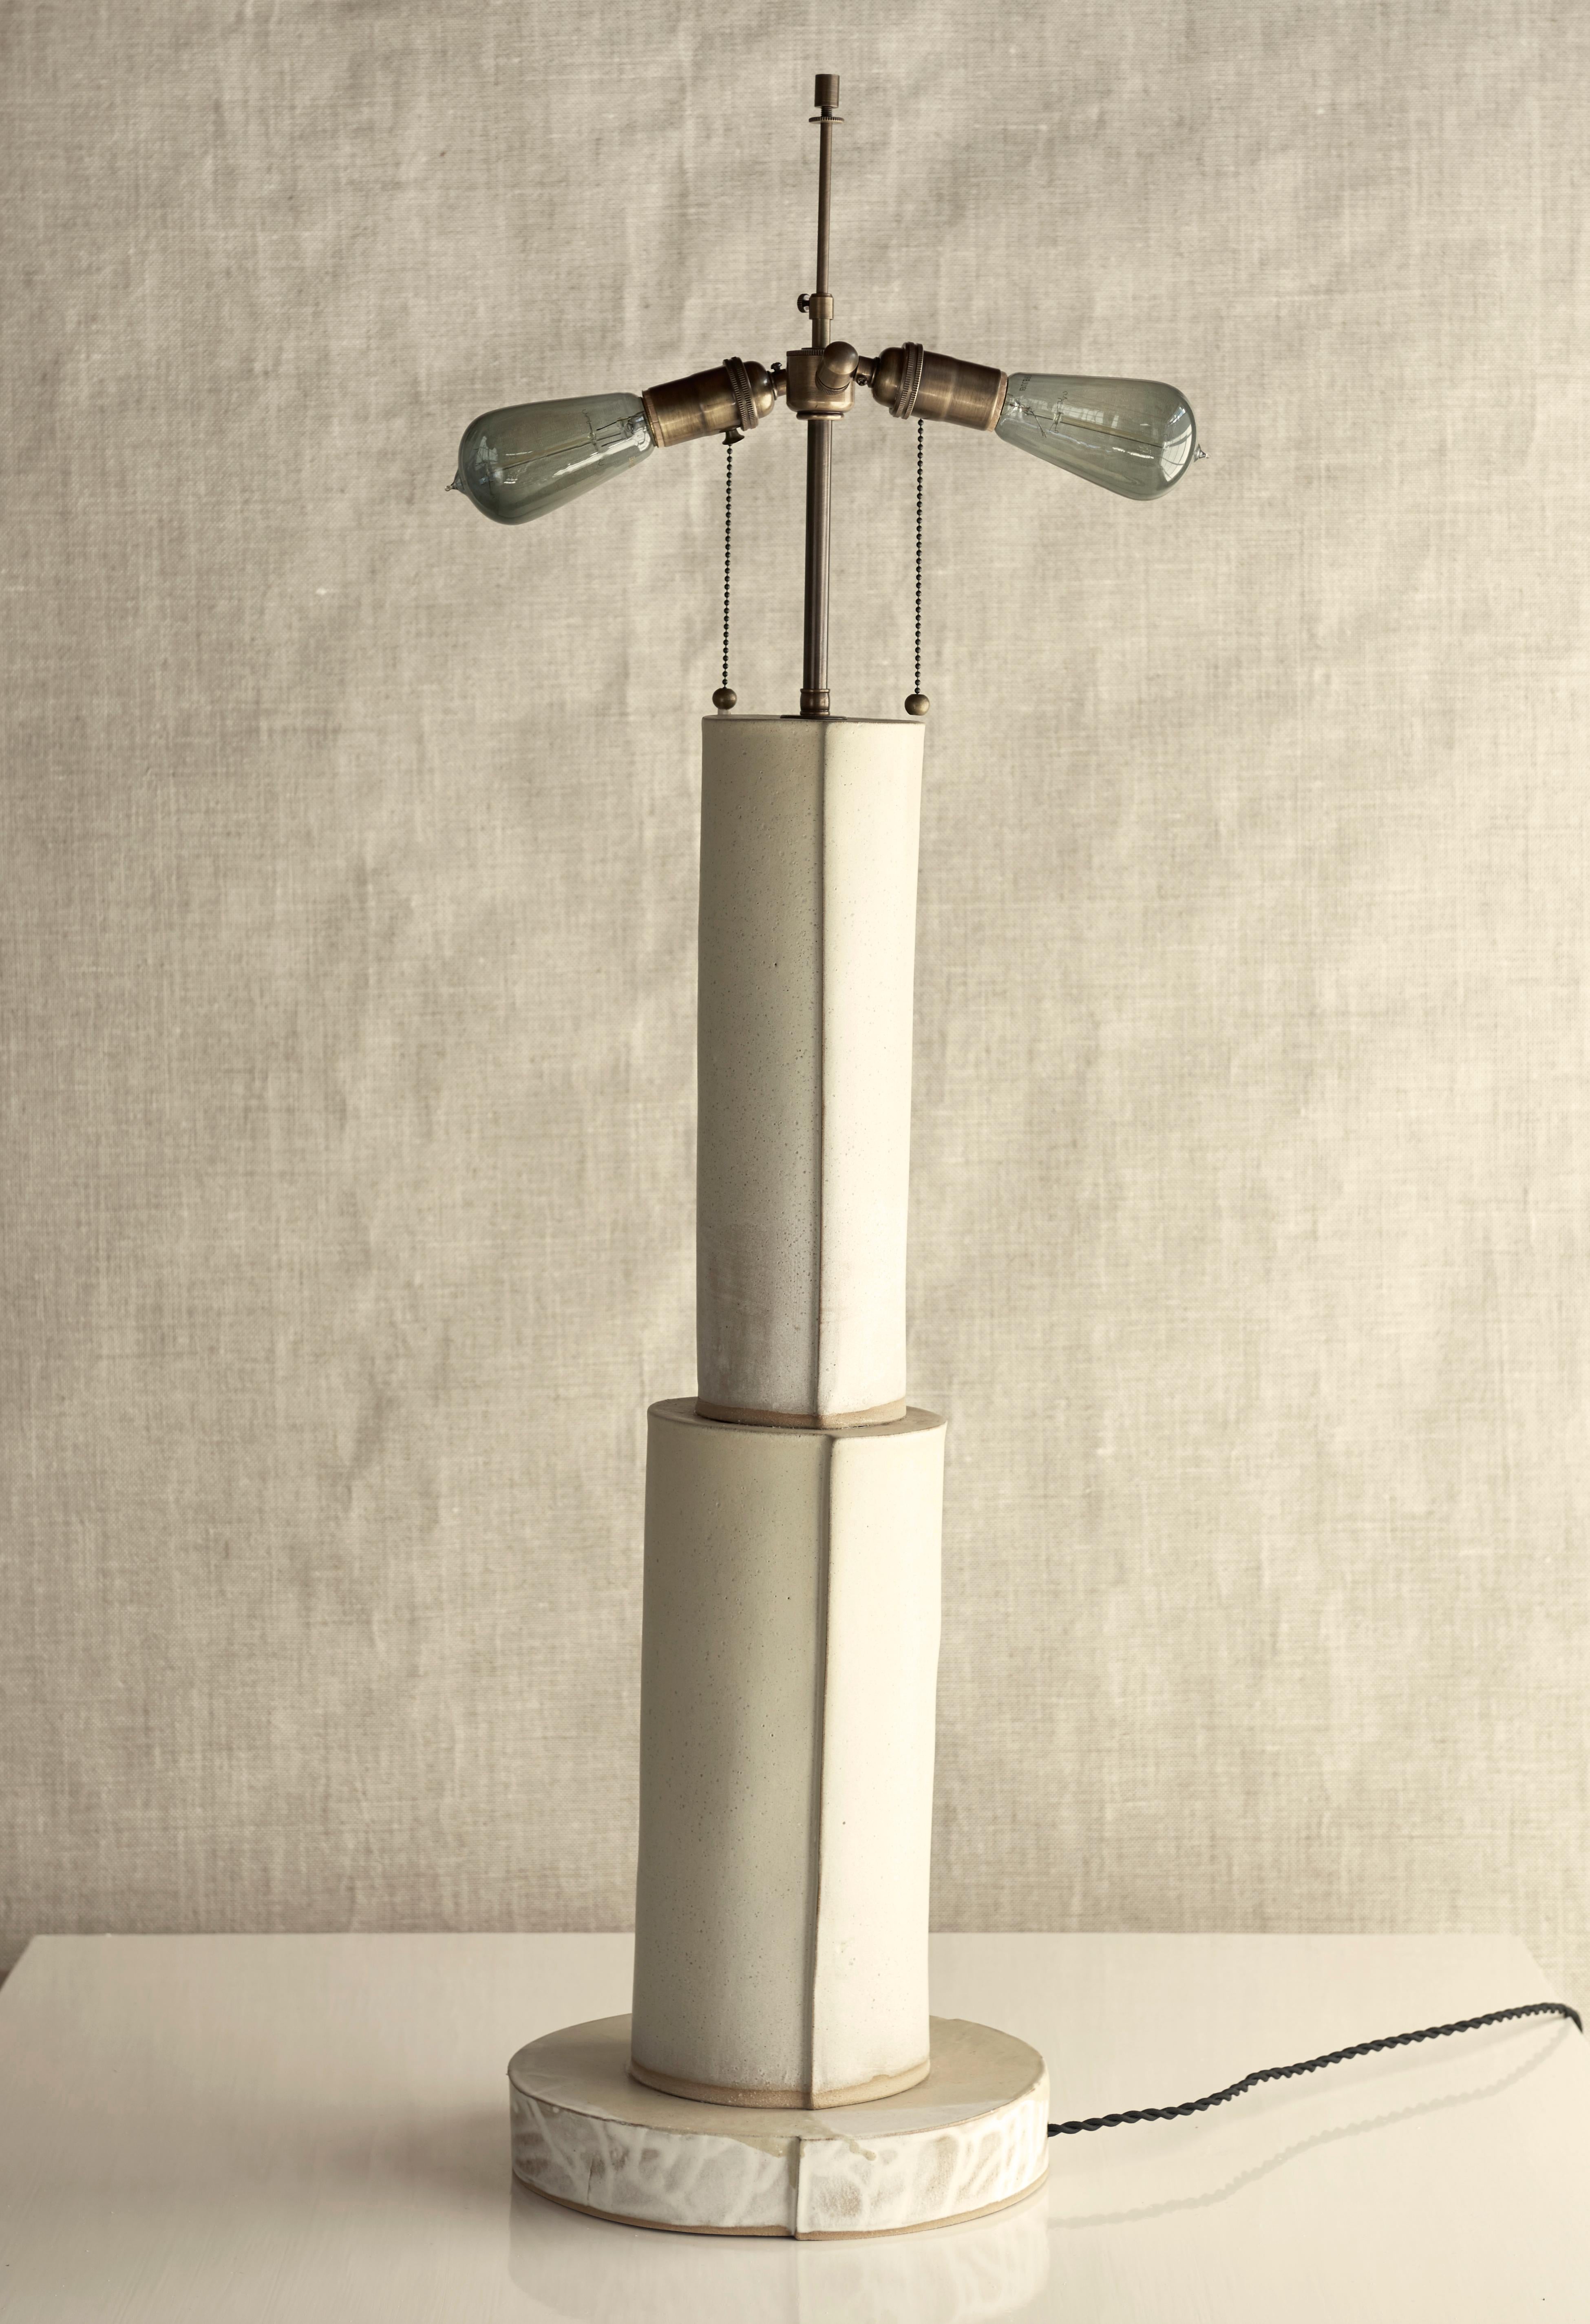 American Studio Lamp, Ceramic Sculptural Table Lamp by Dumais Made